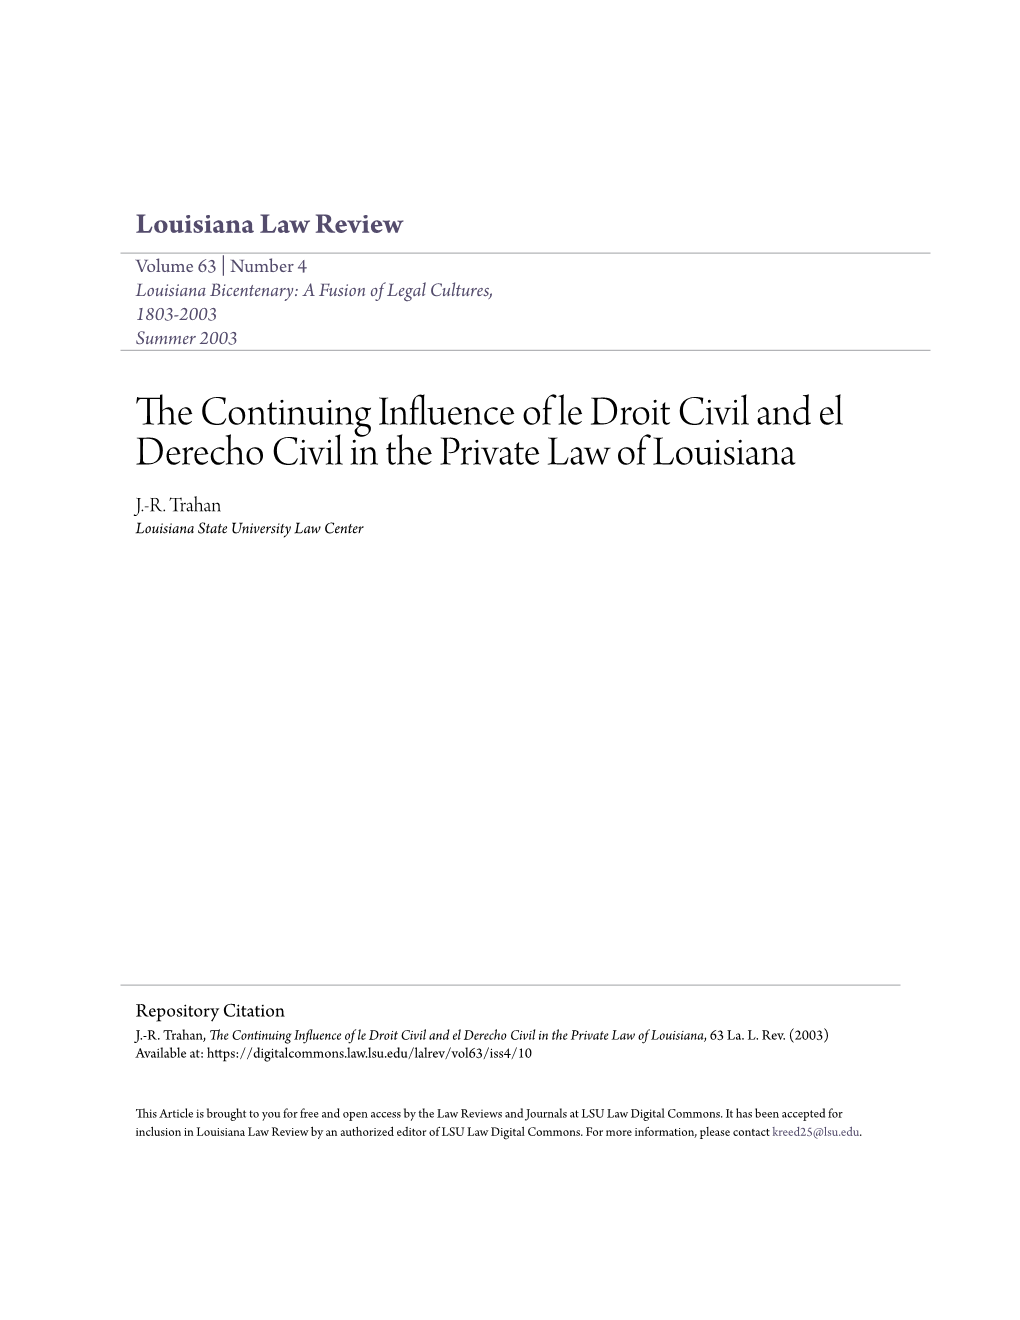 The Continuing Influence of Le Droit Civil and El Derecho Civil in the Private Law of Louisiana, 63 La